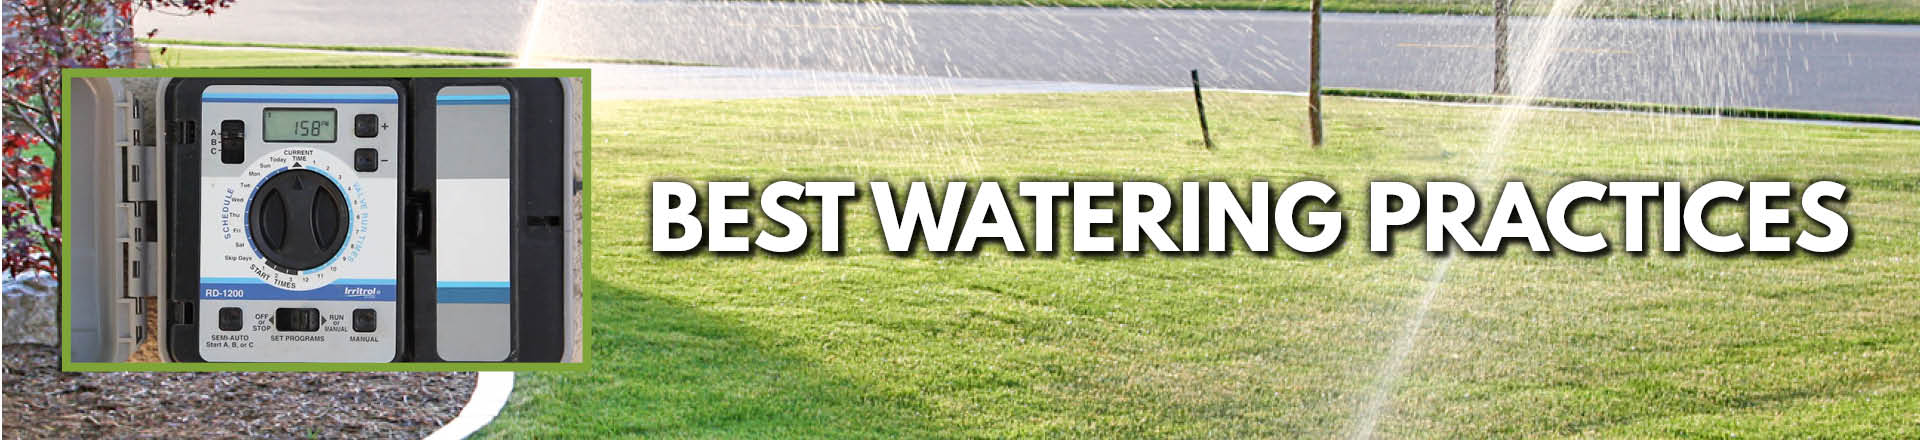 BEST_WATERING_PRACTICES.jpg